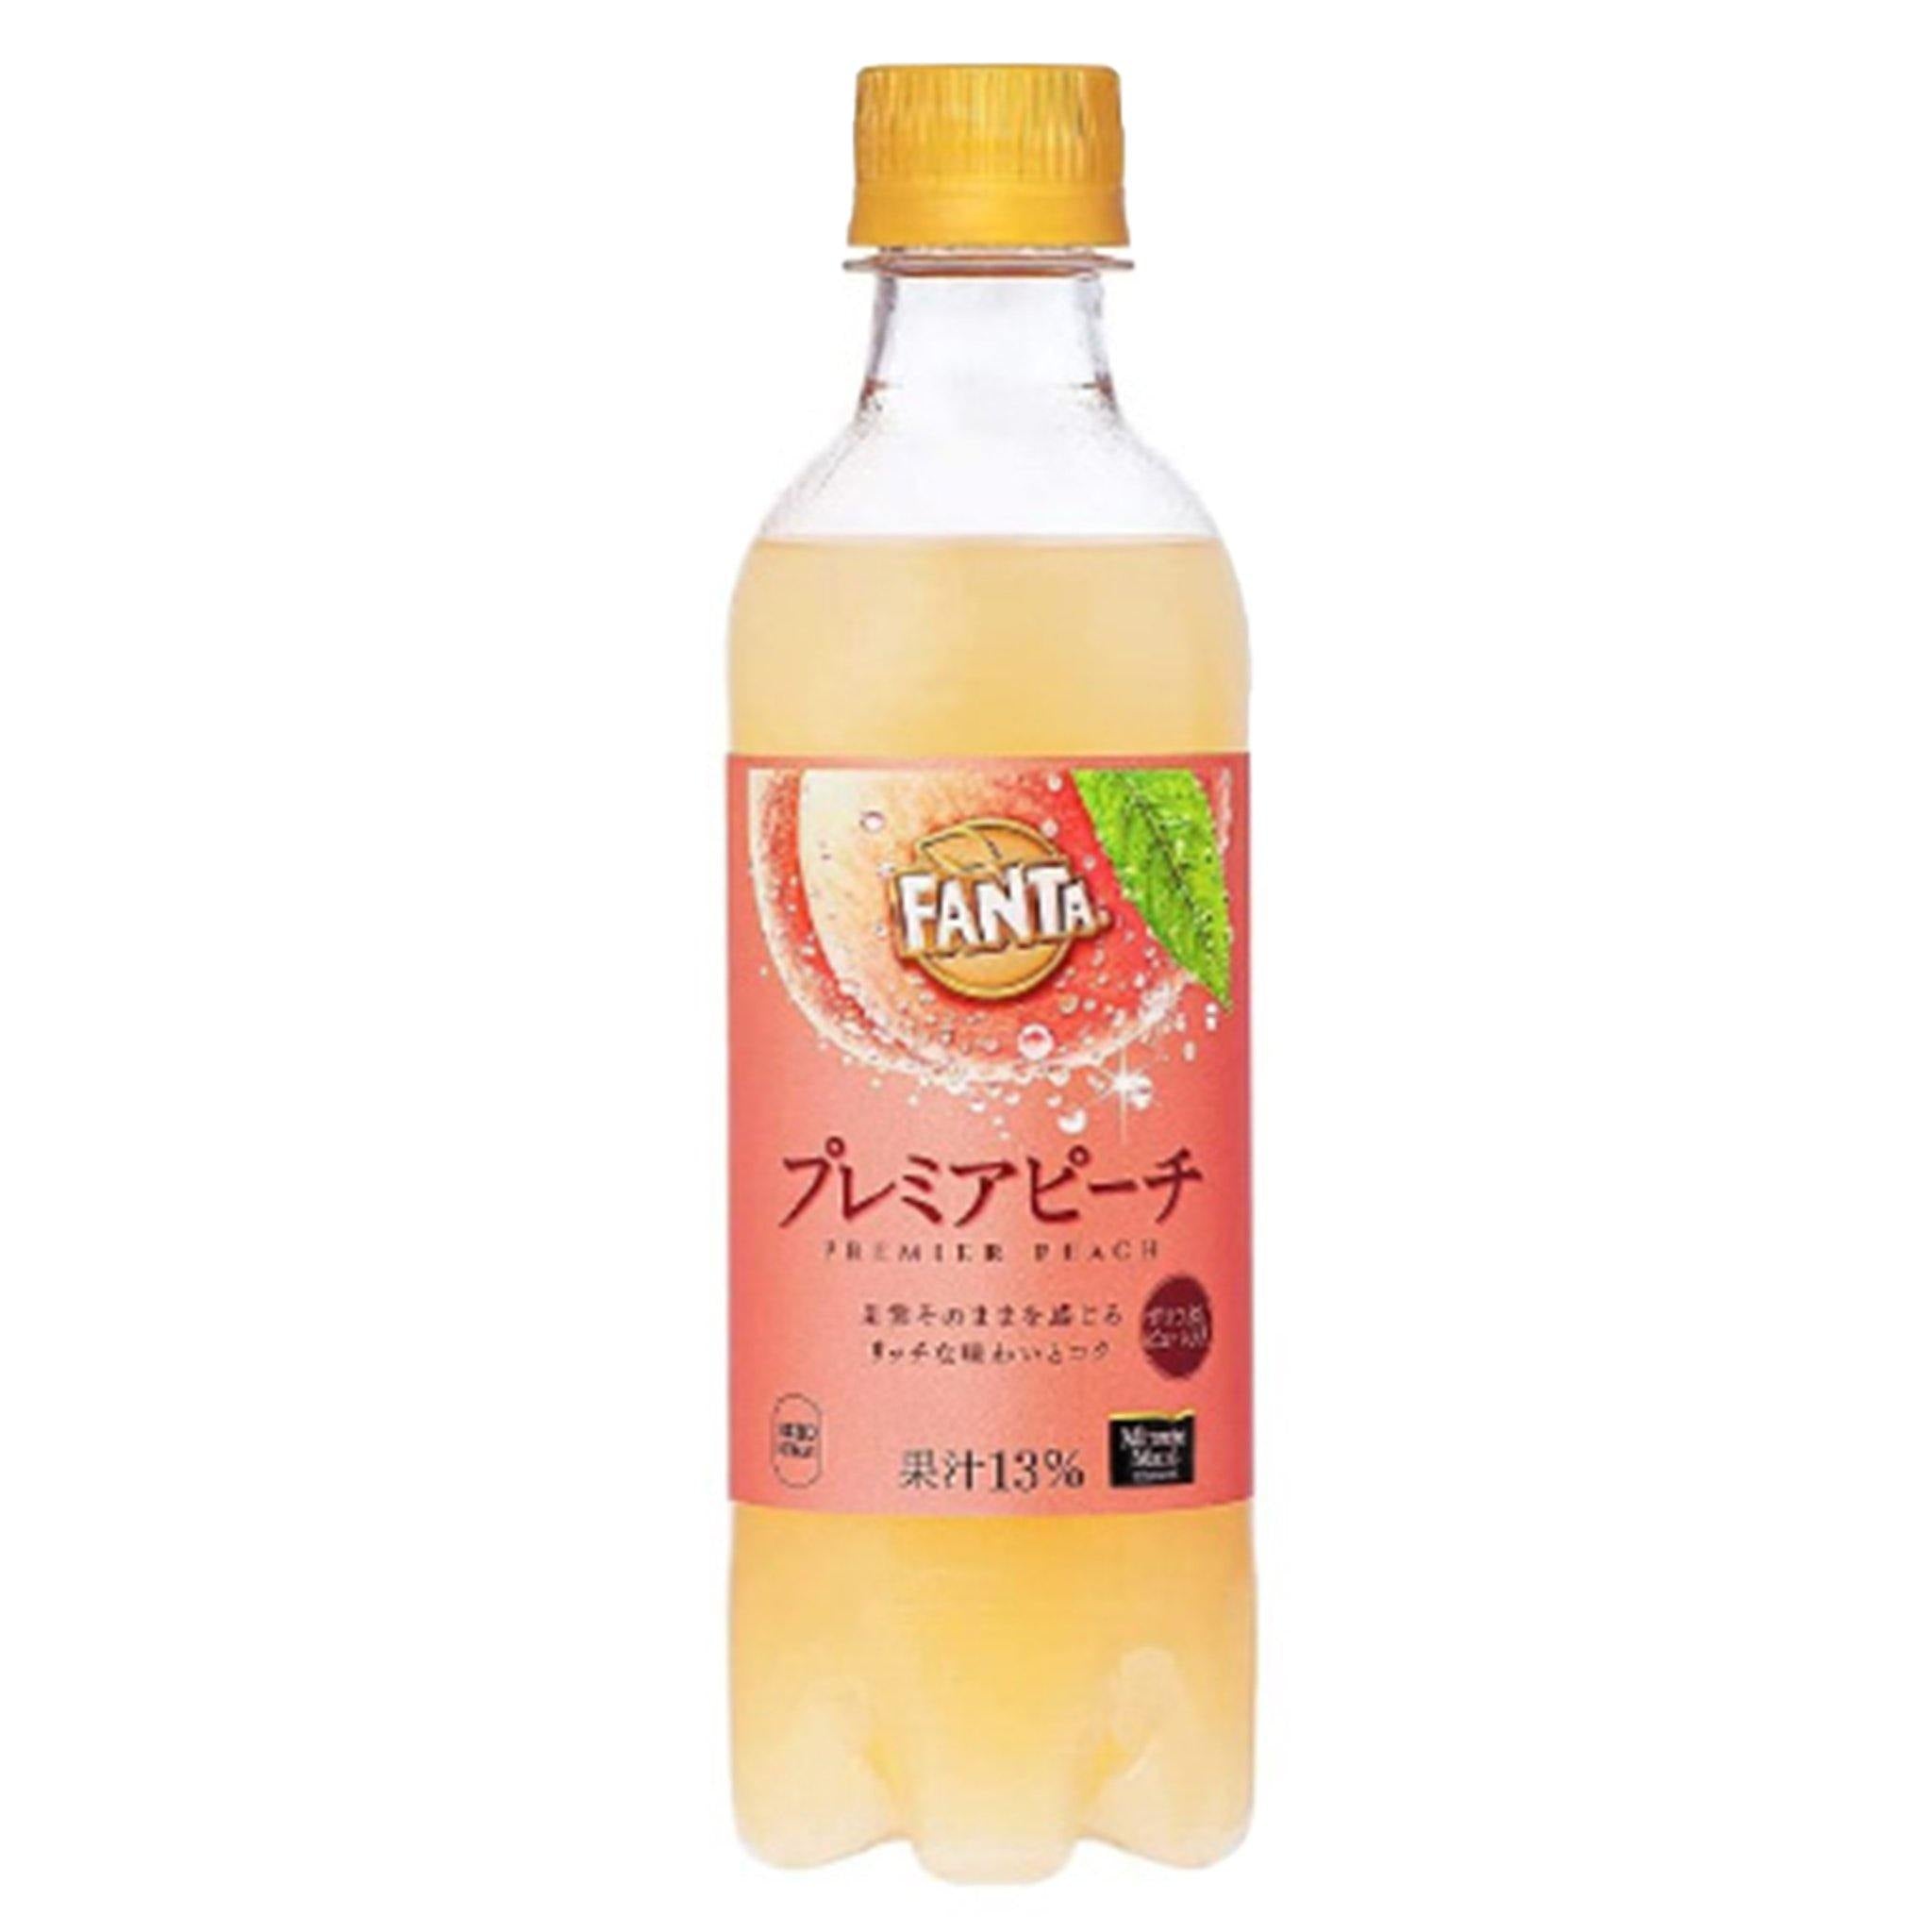 Fanta X Minute Maid Premier Peach - Japan - Sweet Exotics